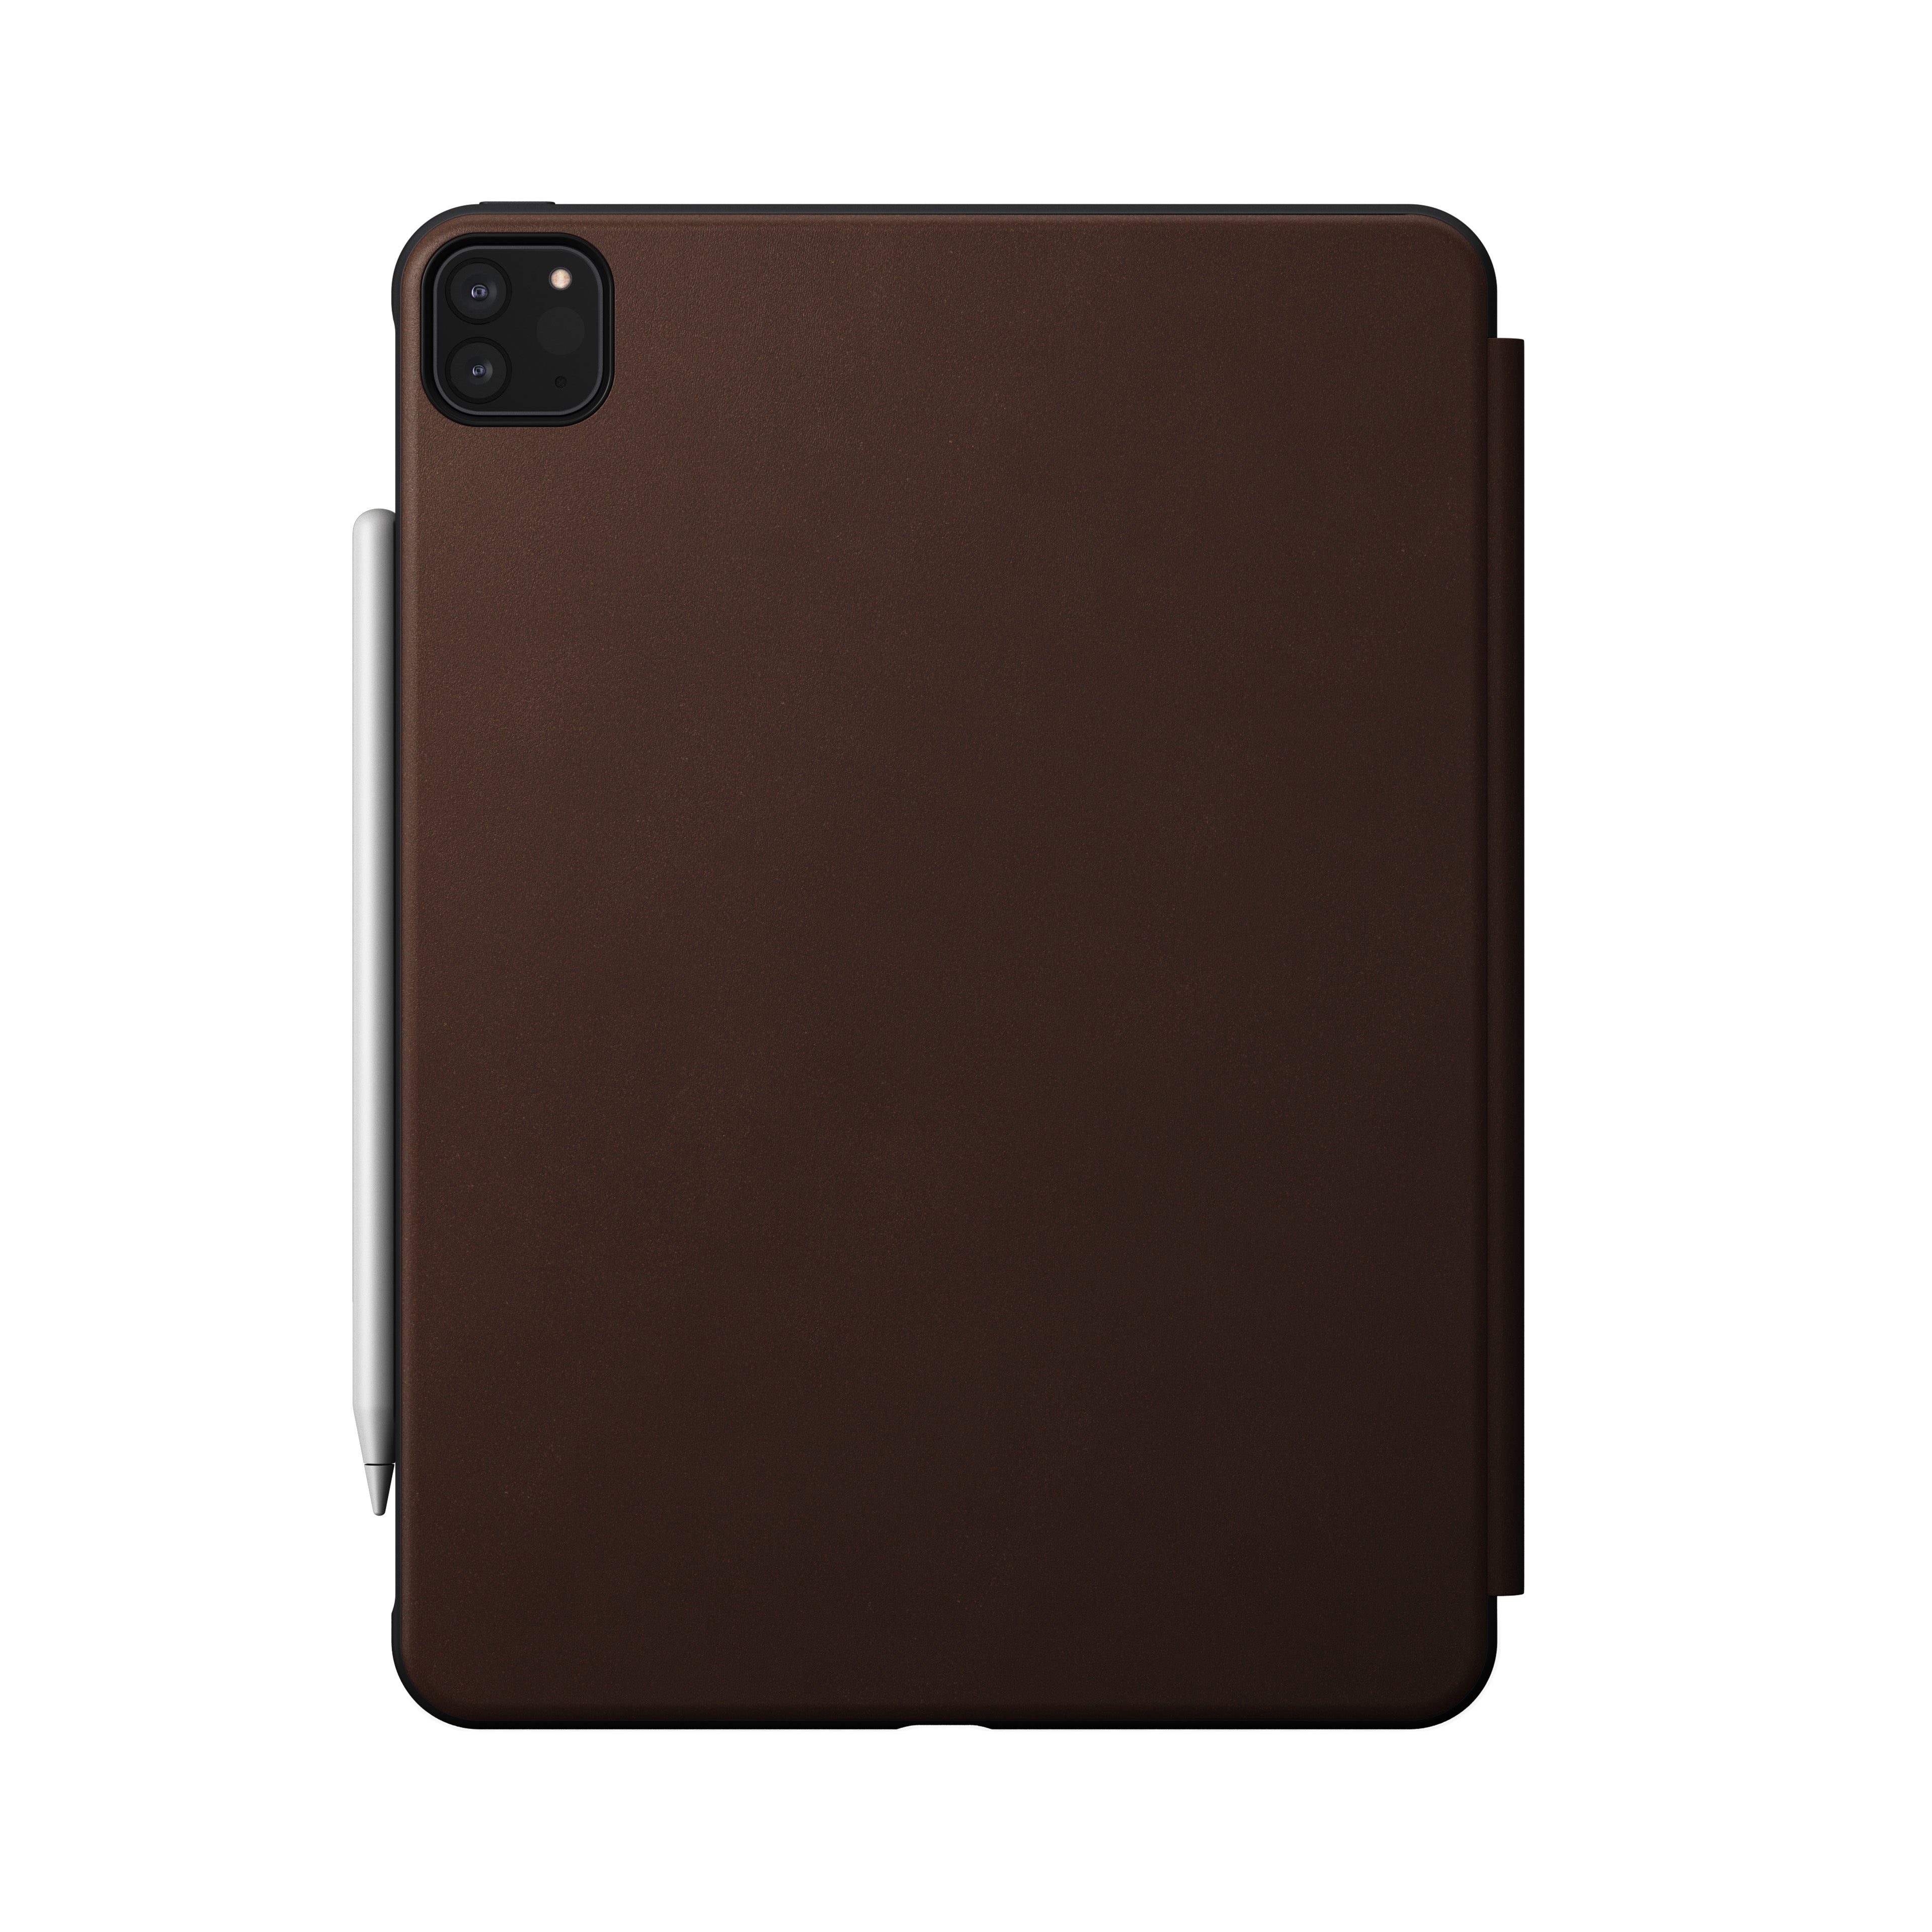 NOMAD Mordern Rugged Folio ECCO Leather Case for iPad Pro 11"(2021) Default NOMAD 